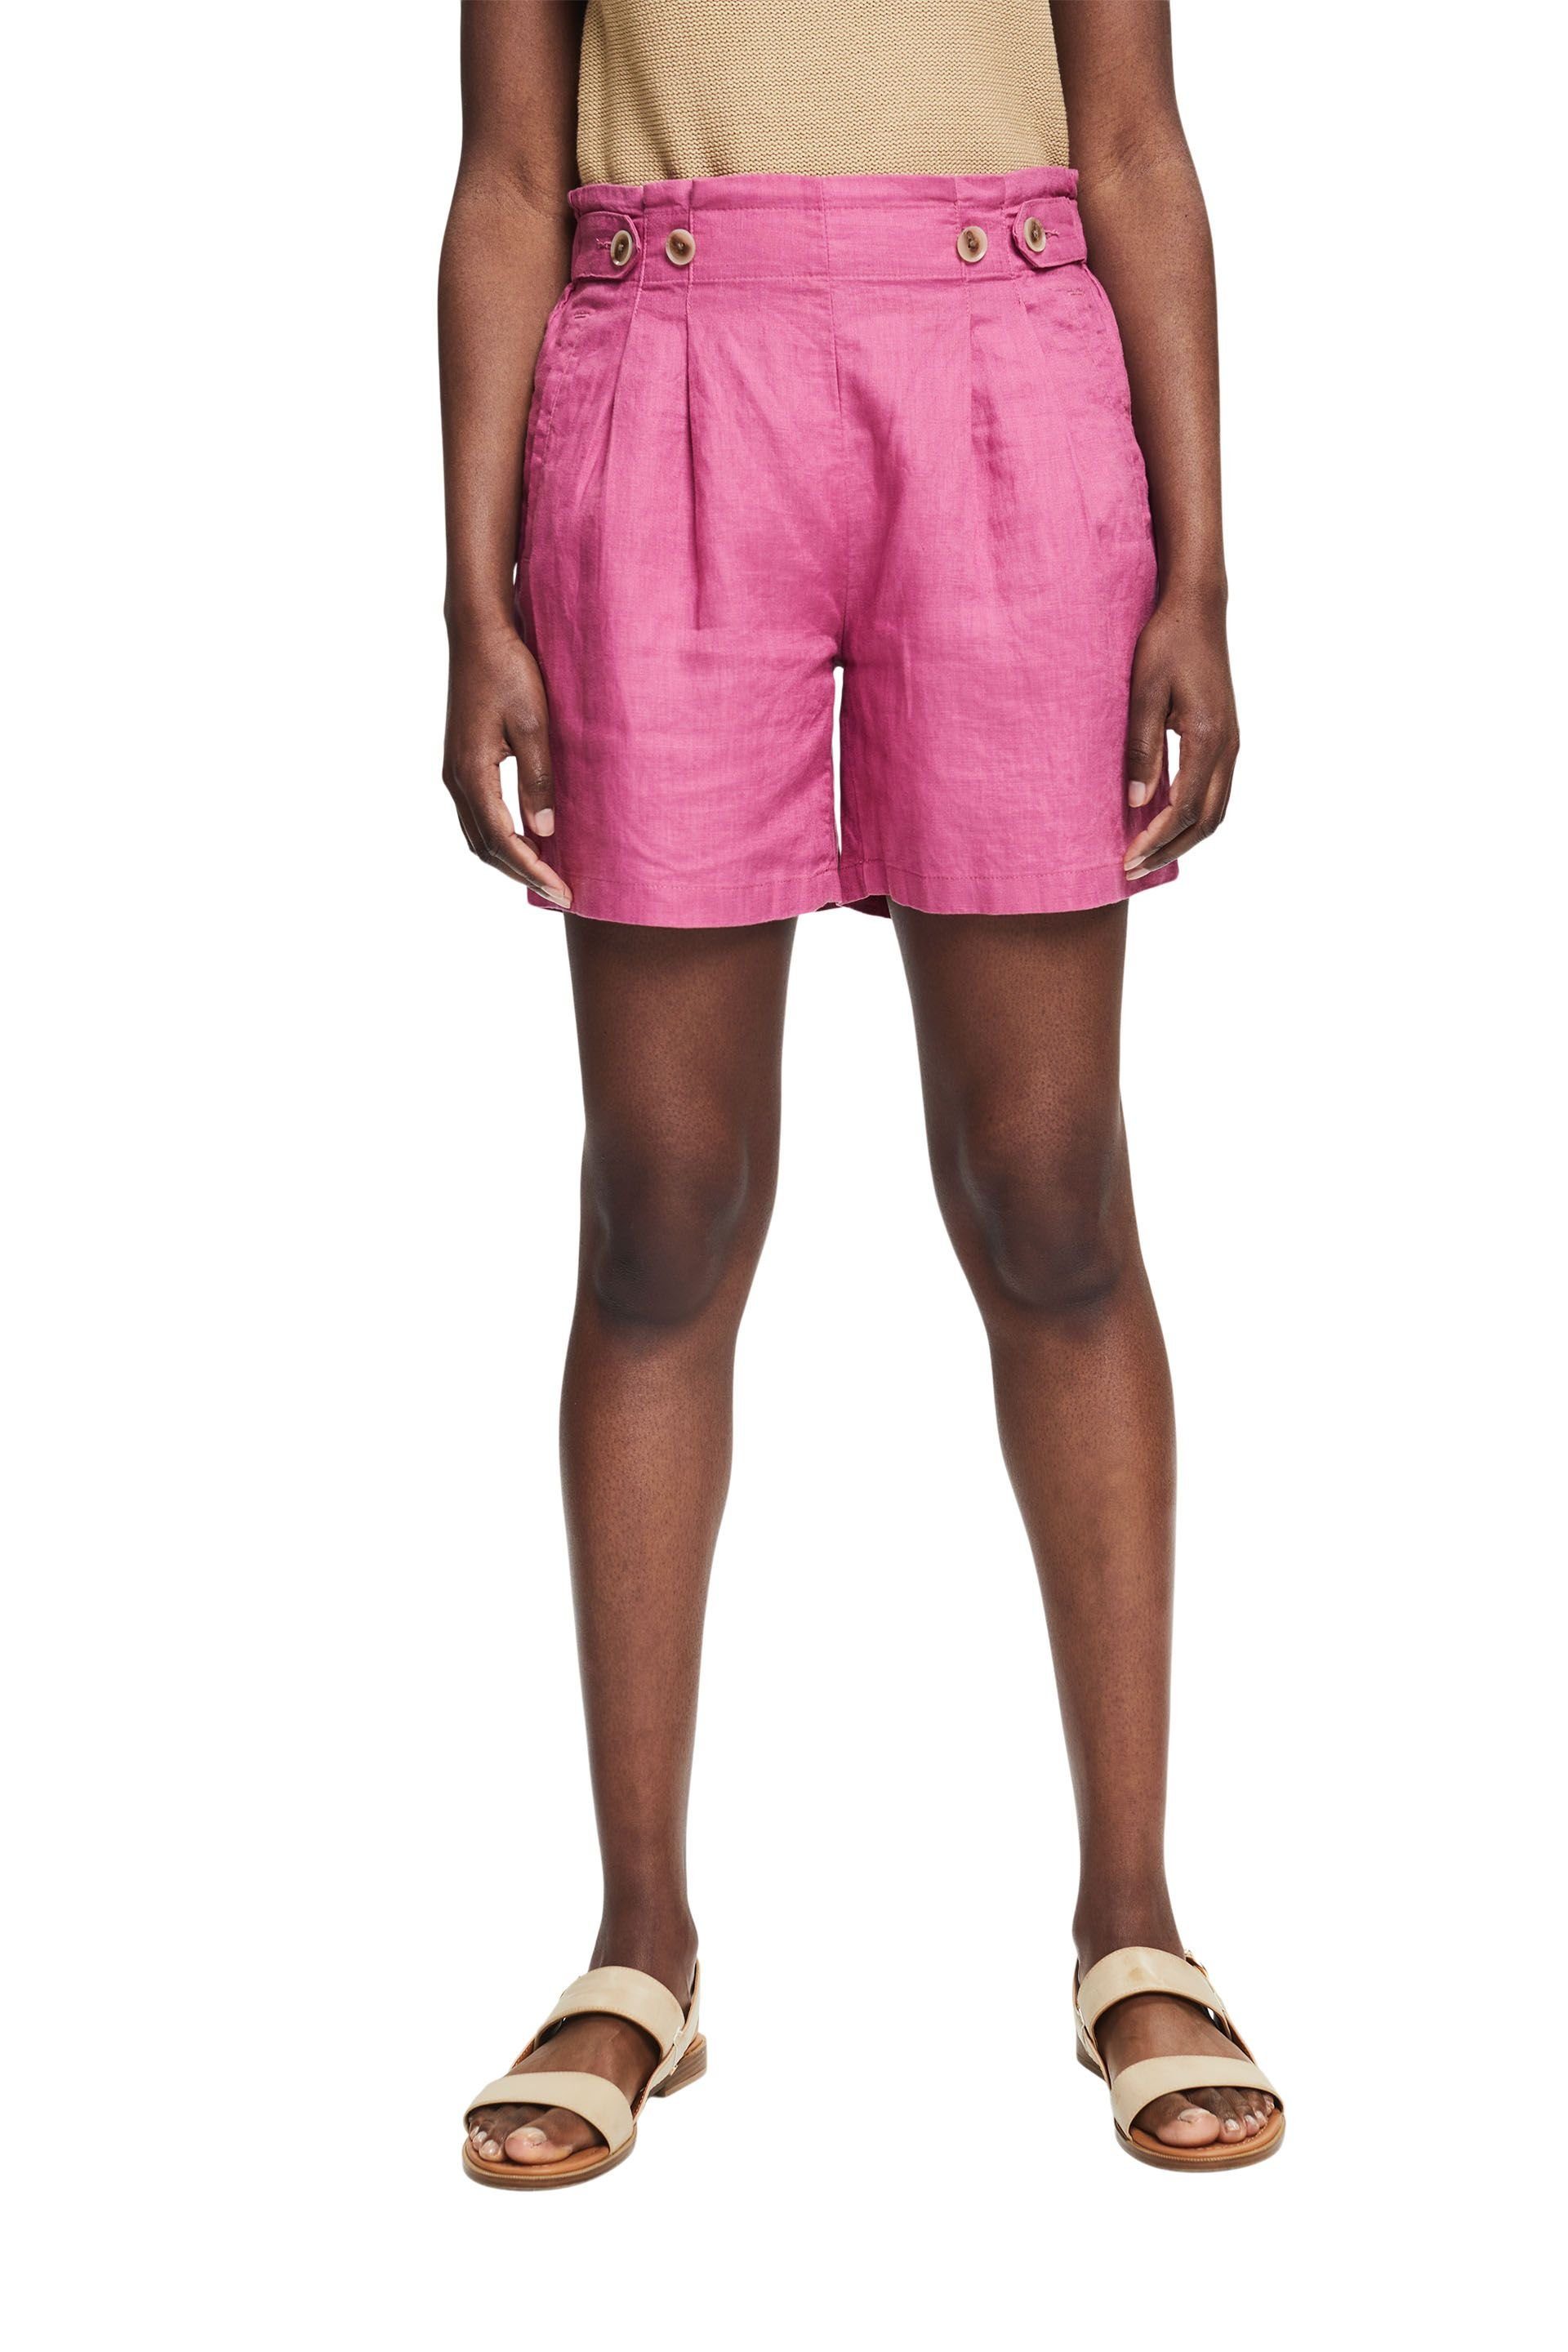 Esprit Shorts violet | Shorts